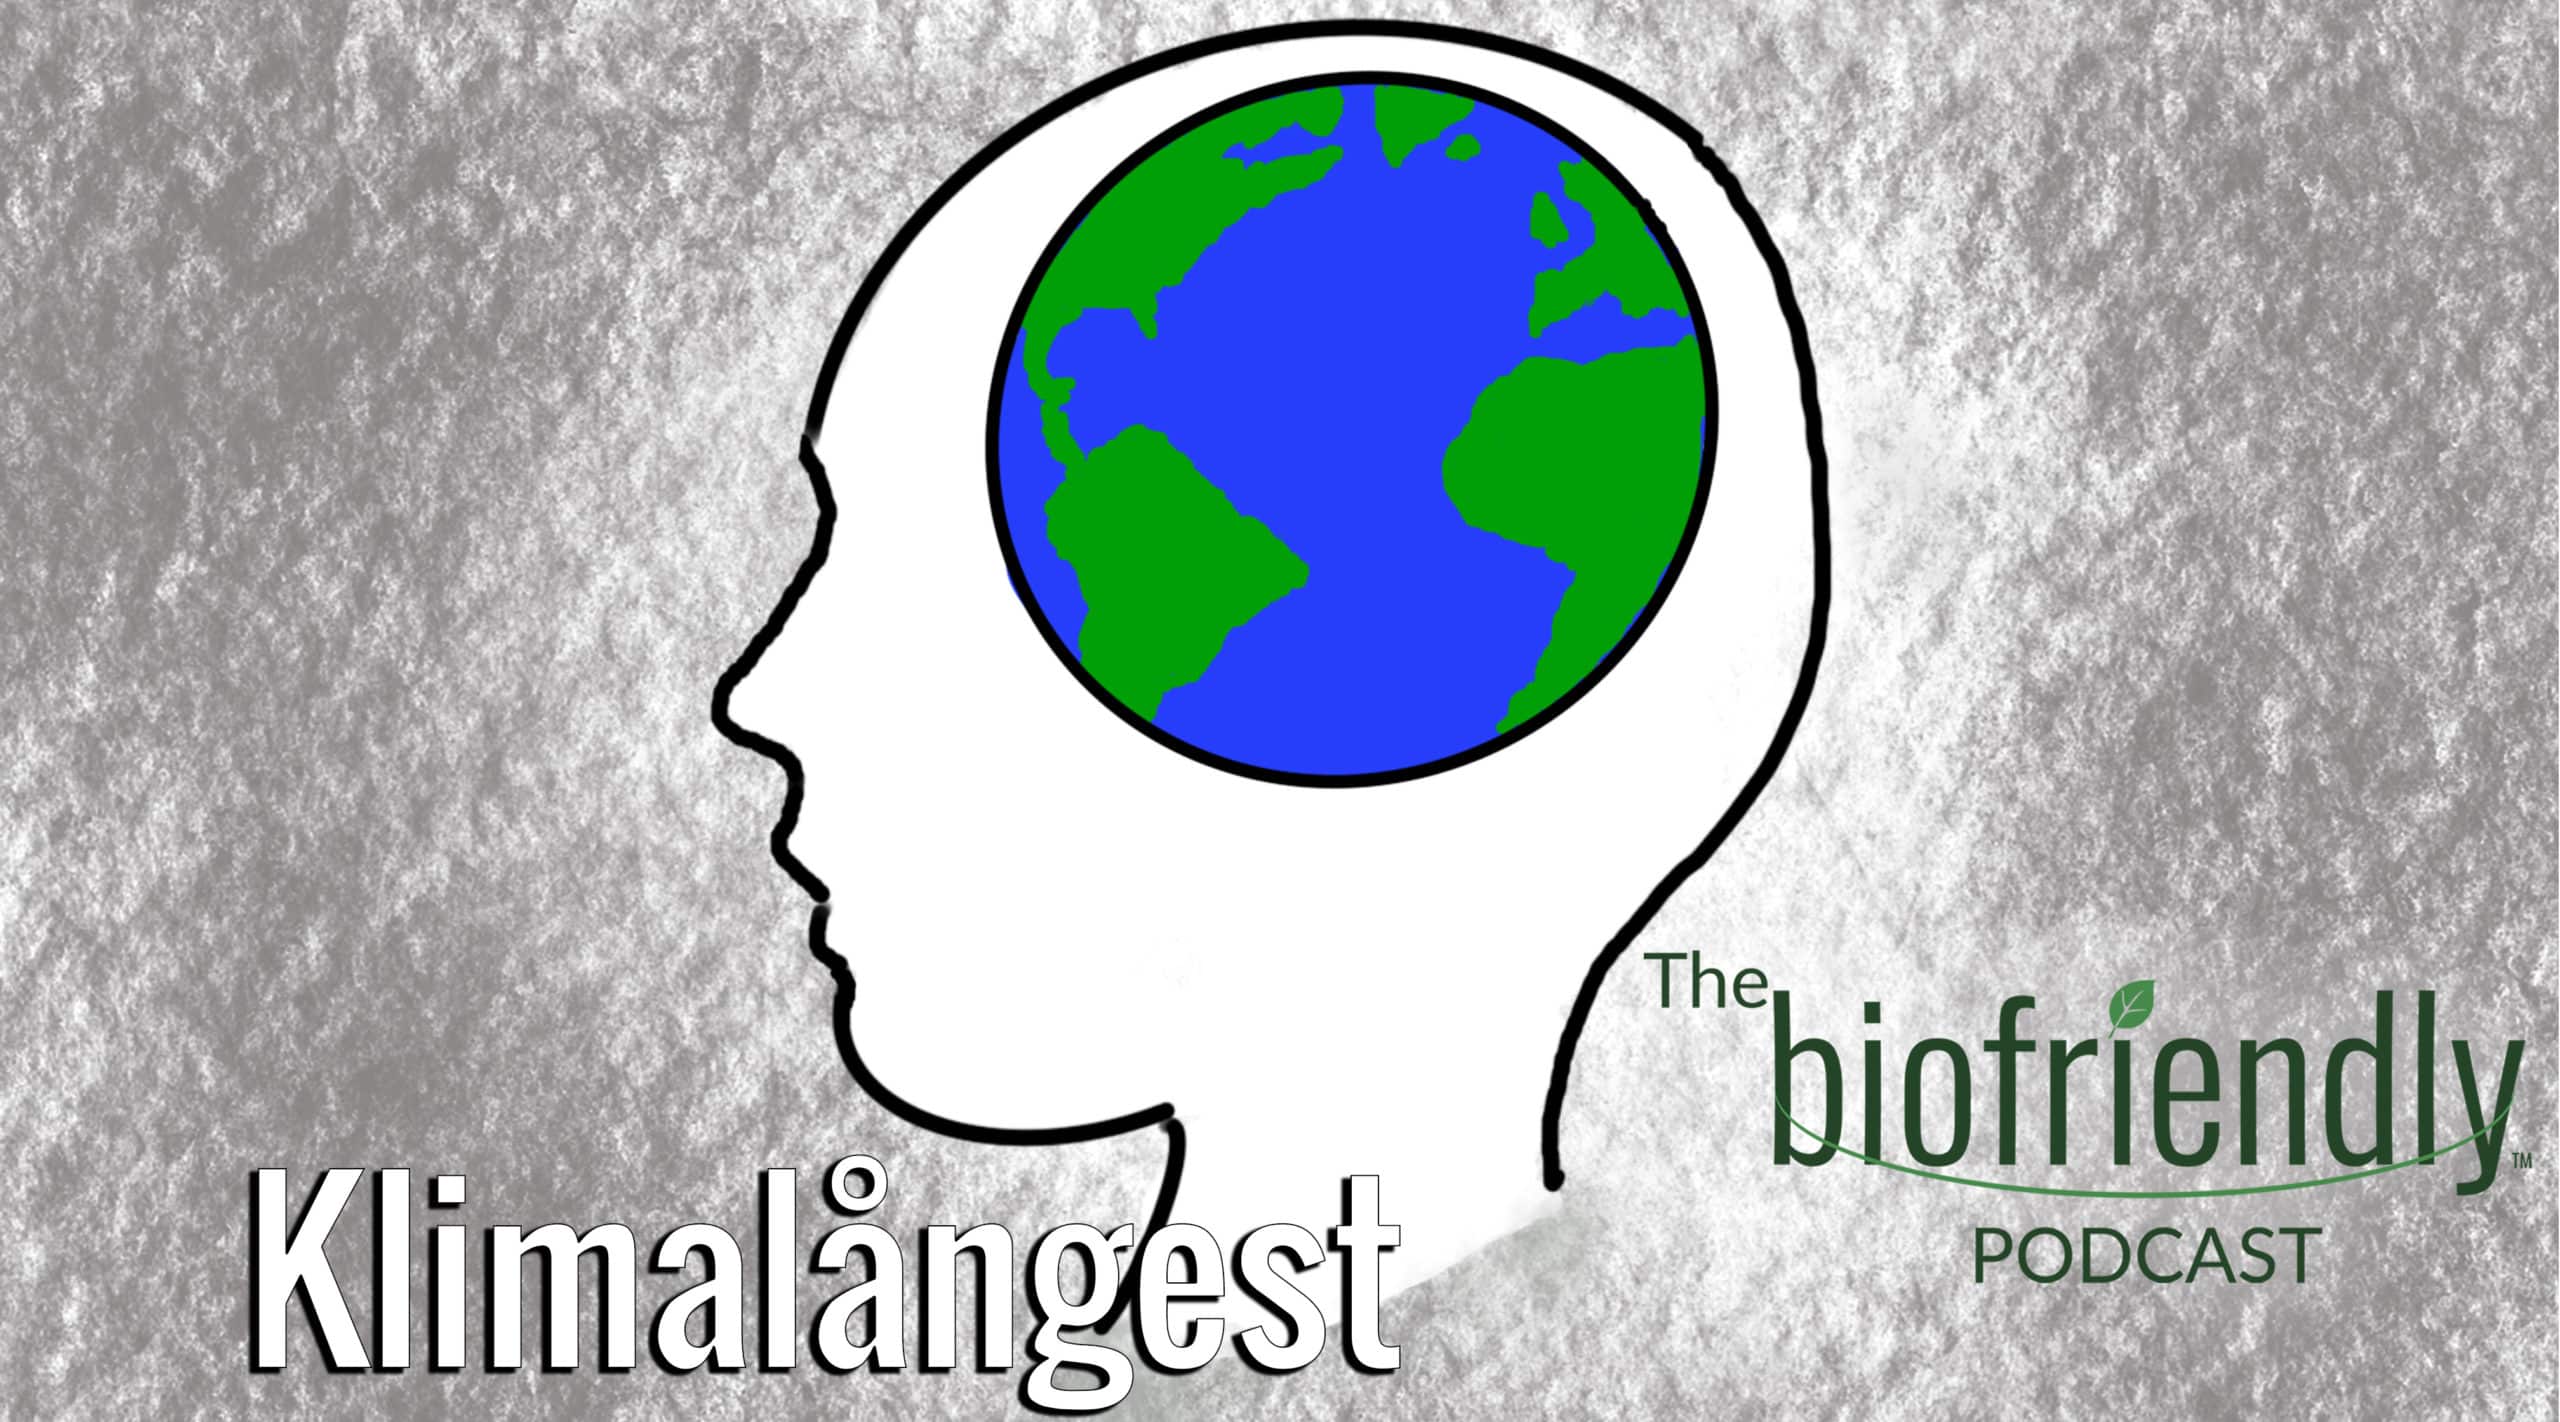 The Biofriendly Podcast - Episode 33 - Klimatångest